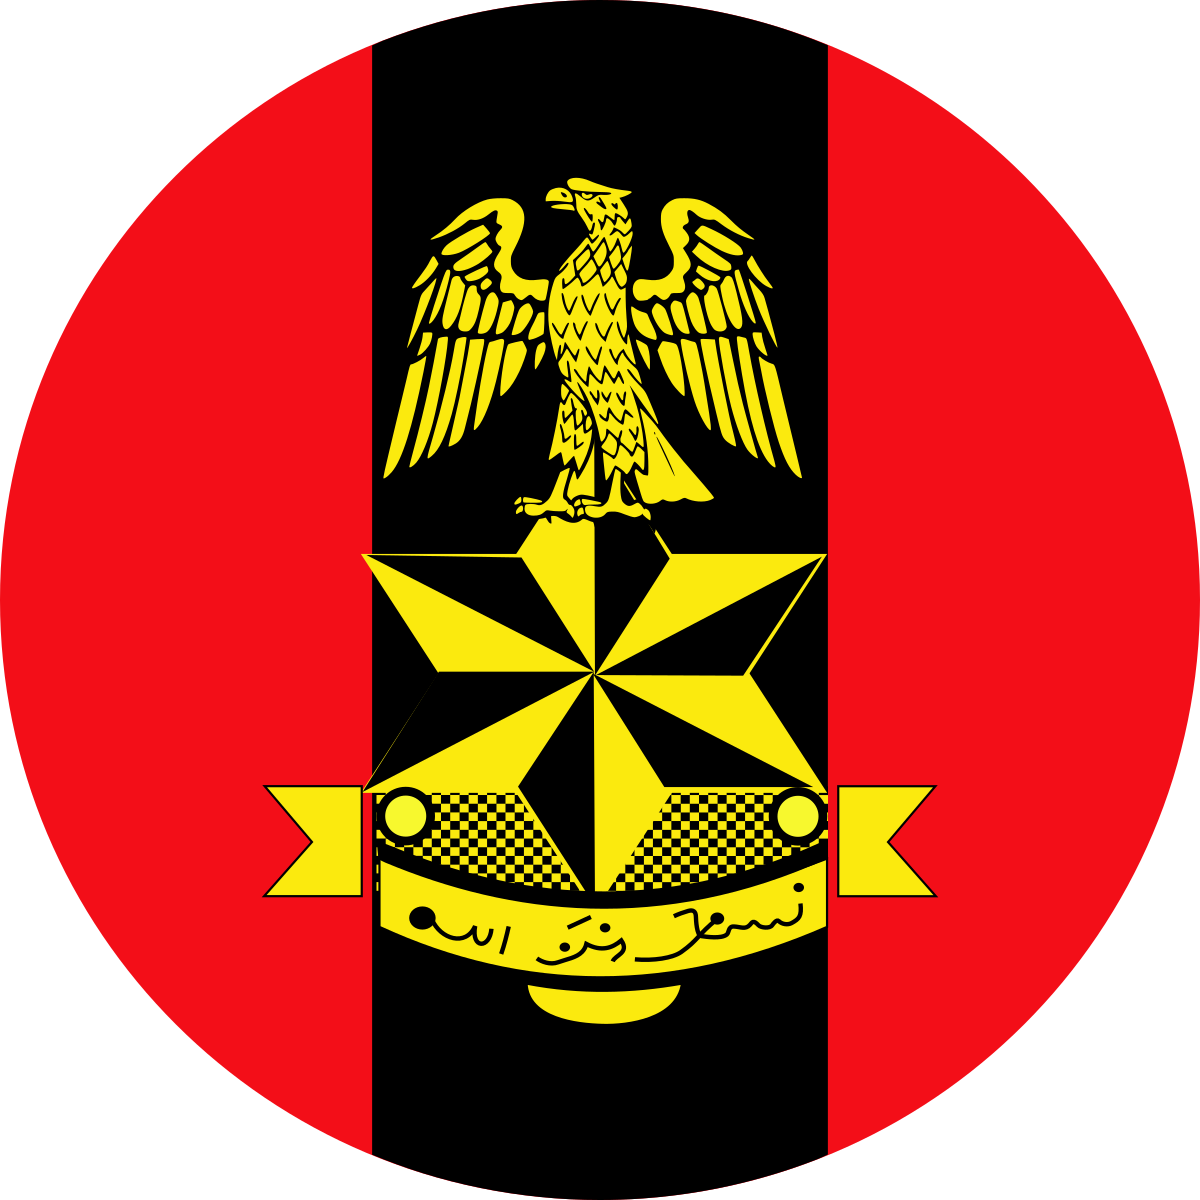 nigerian-army-dssc-job-recruitment-2020-2021-apply-now-joecrack-concept